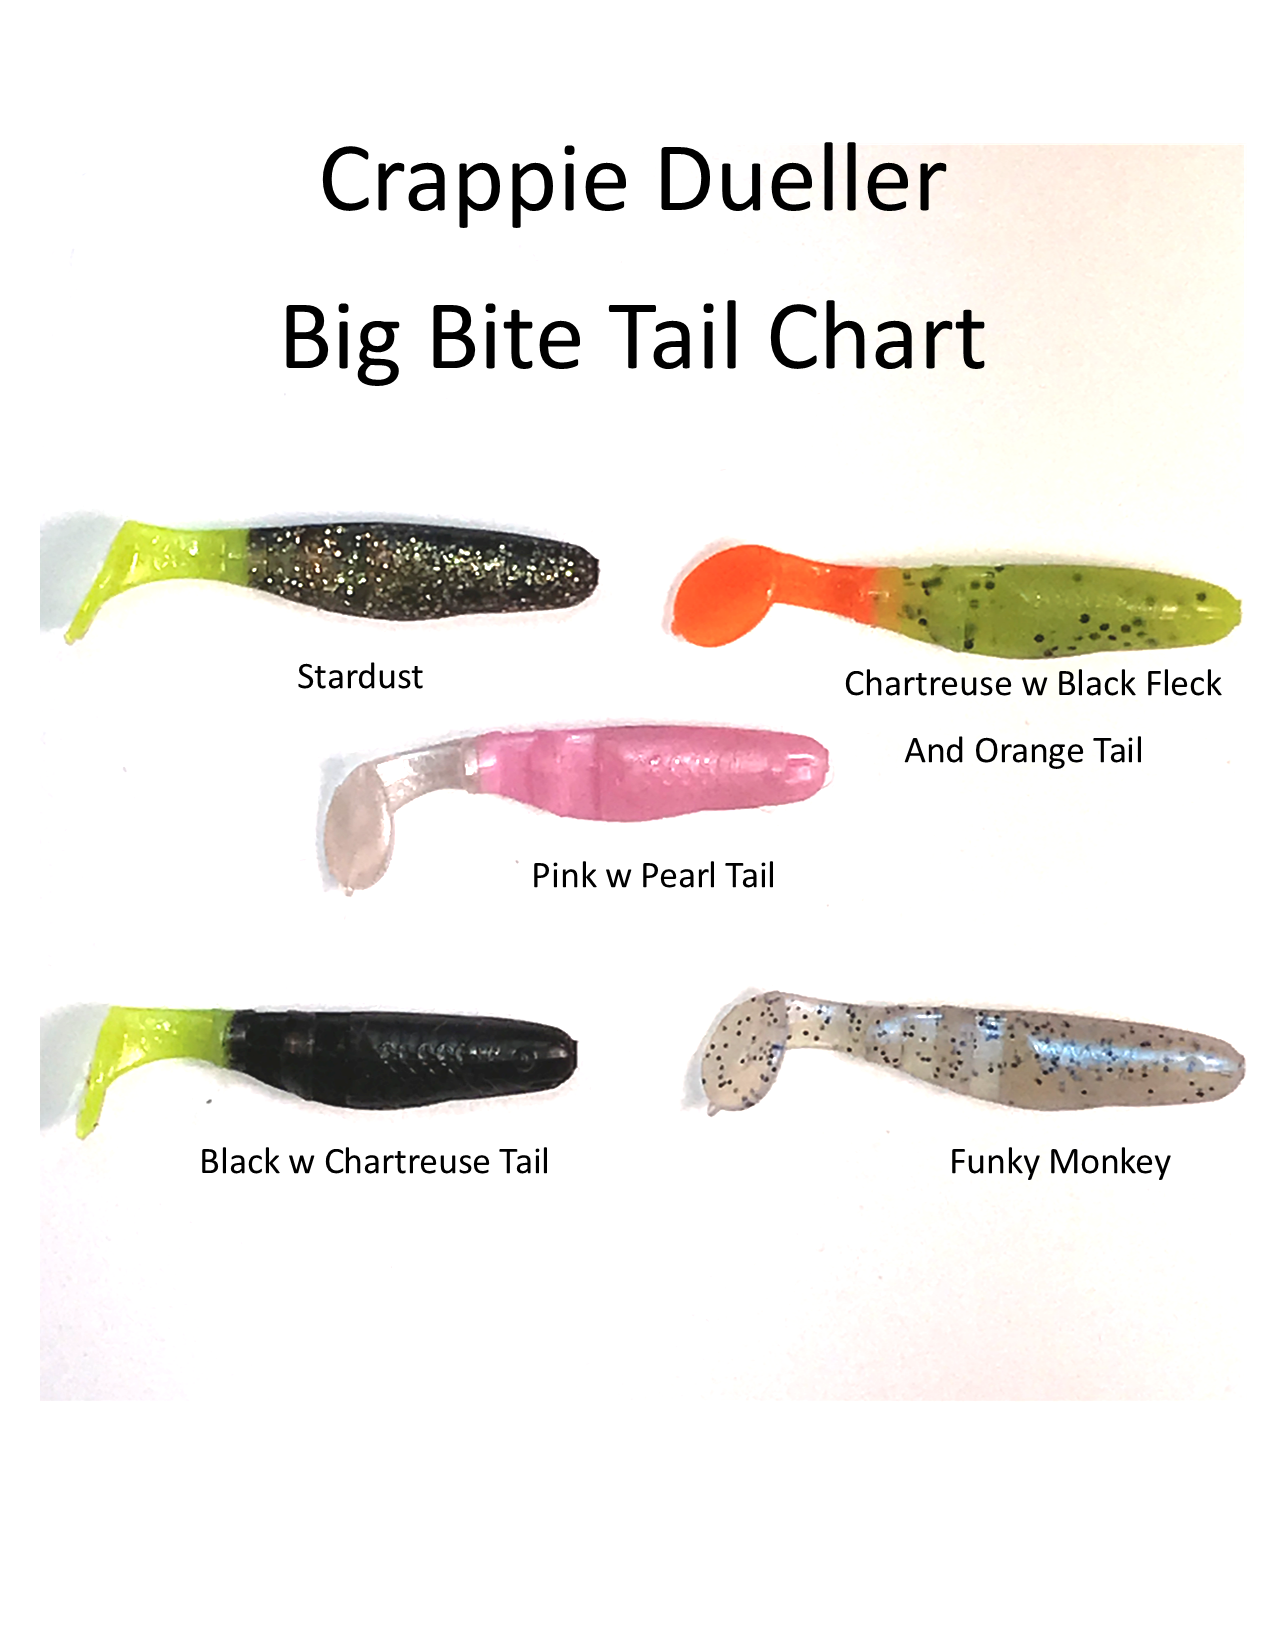 https://glasswaterangling.com/wp-content/uploads/2020/10/Big-Bite-Tail-Chart.png